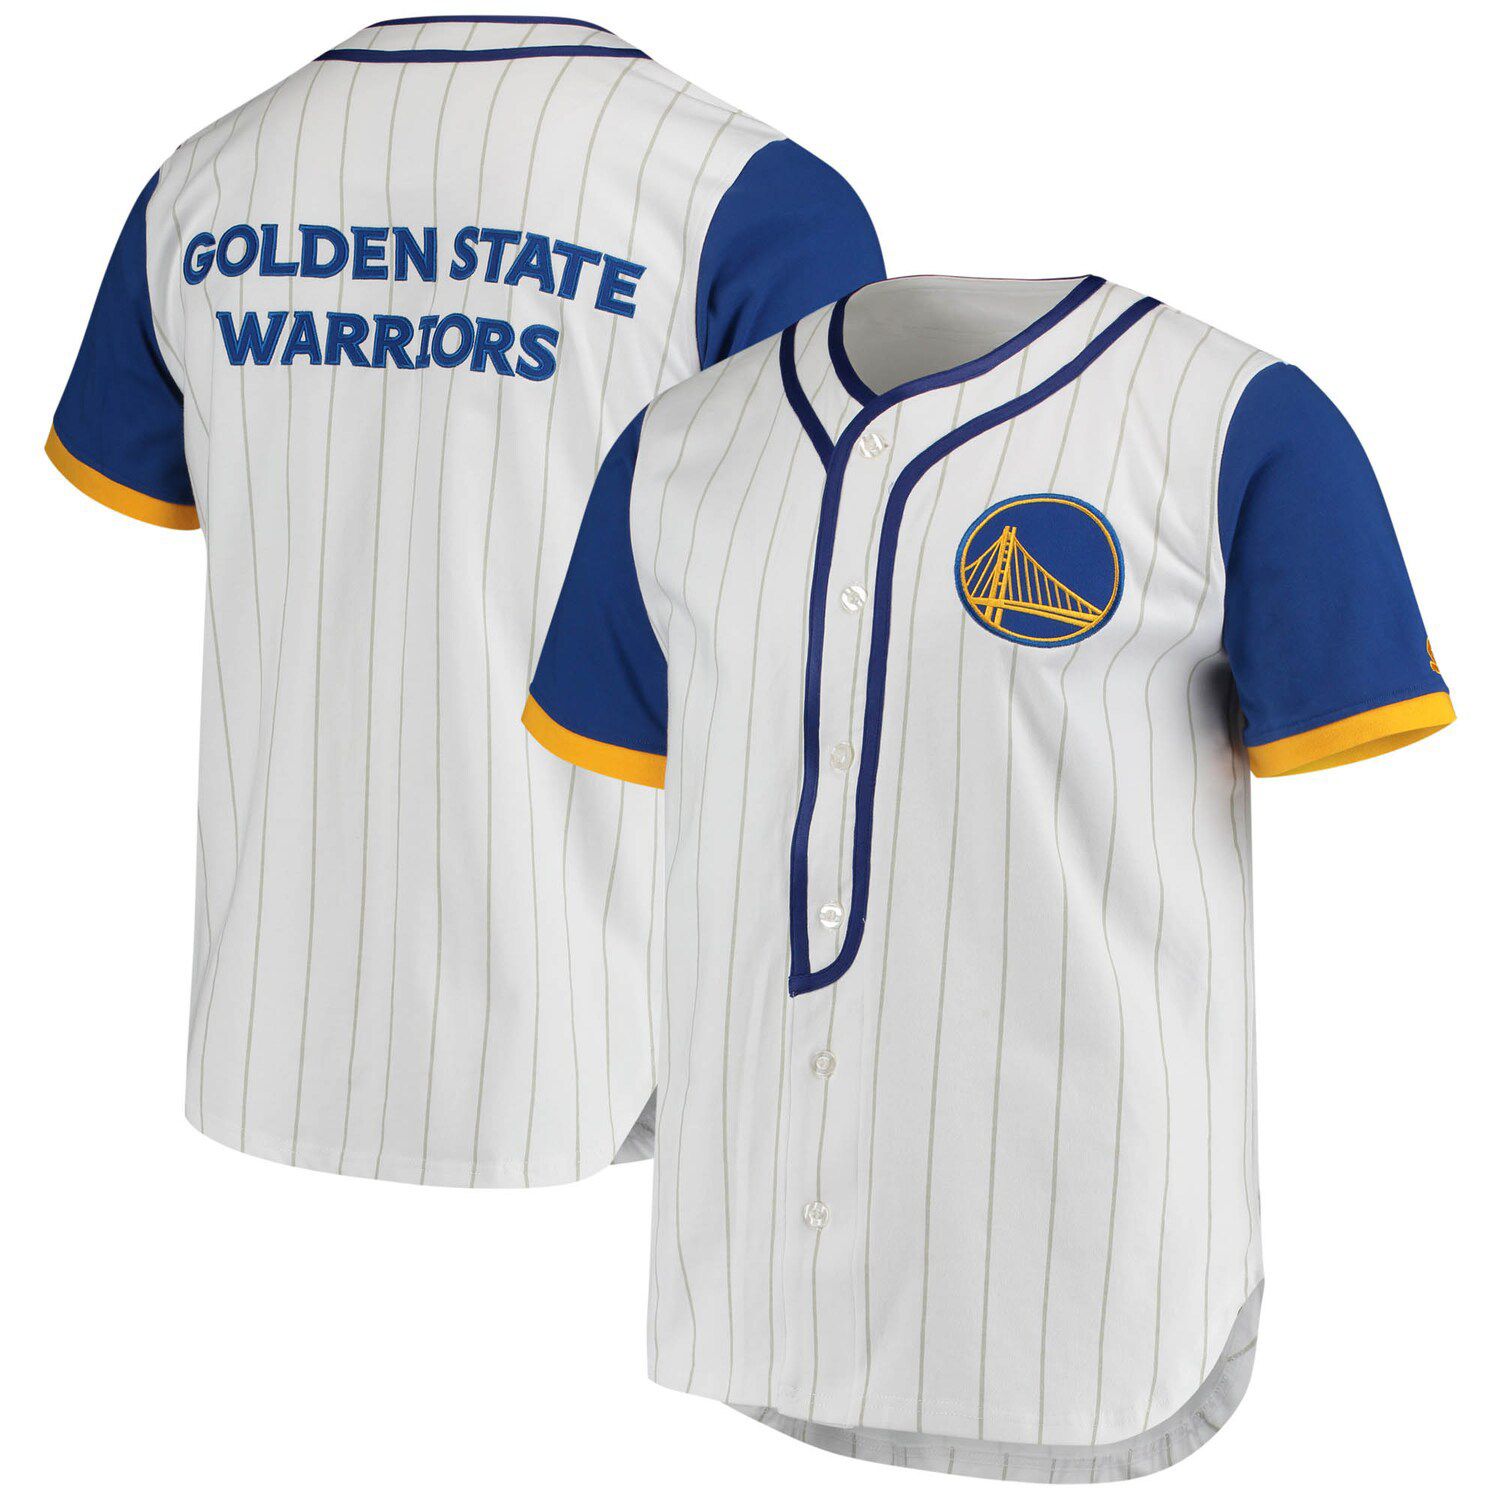 golden state baseball jersey